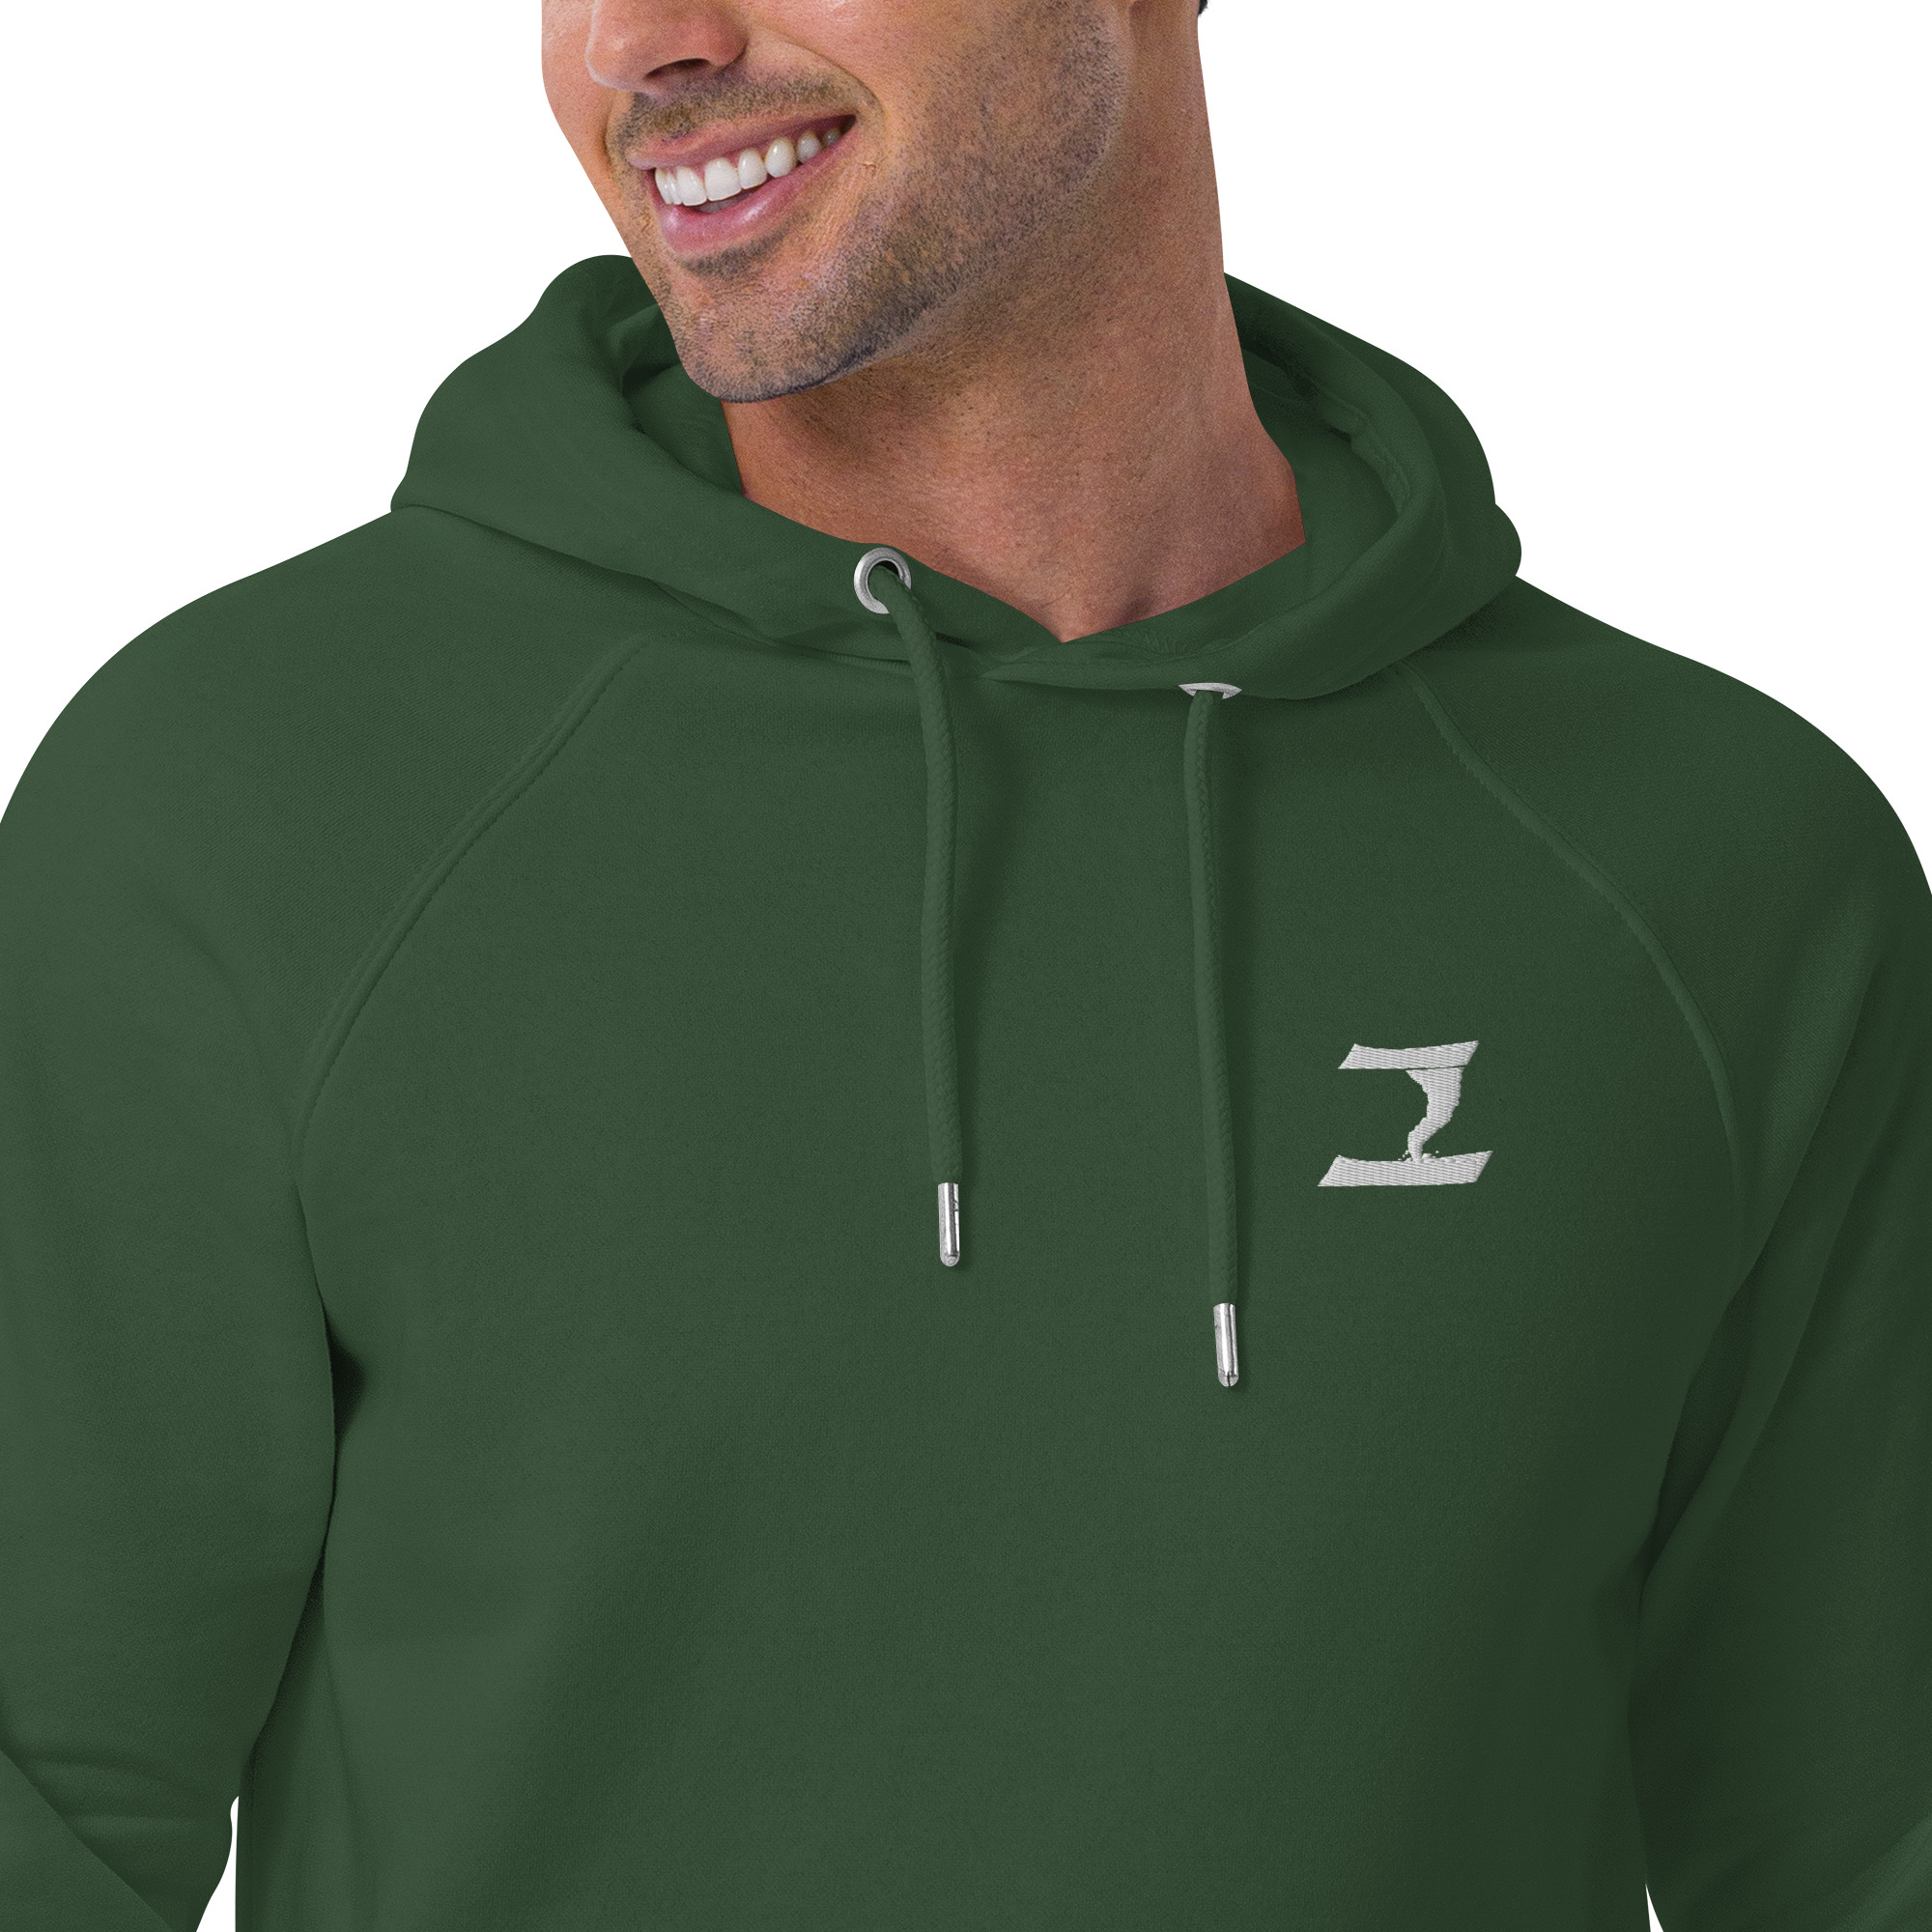 unisex-eco-raglan-hoodie-bottle-green-zoomed-in-2-631695eb07a28.jpg